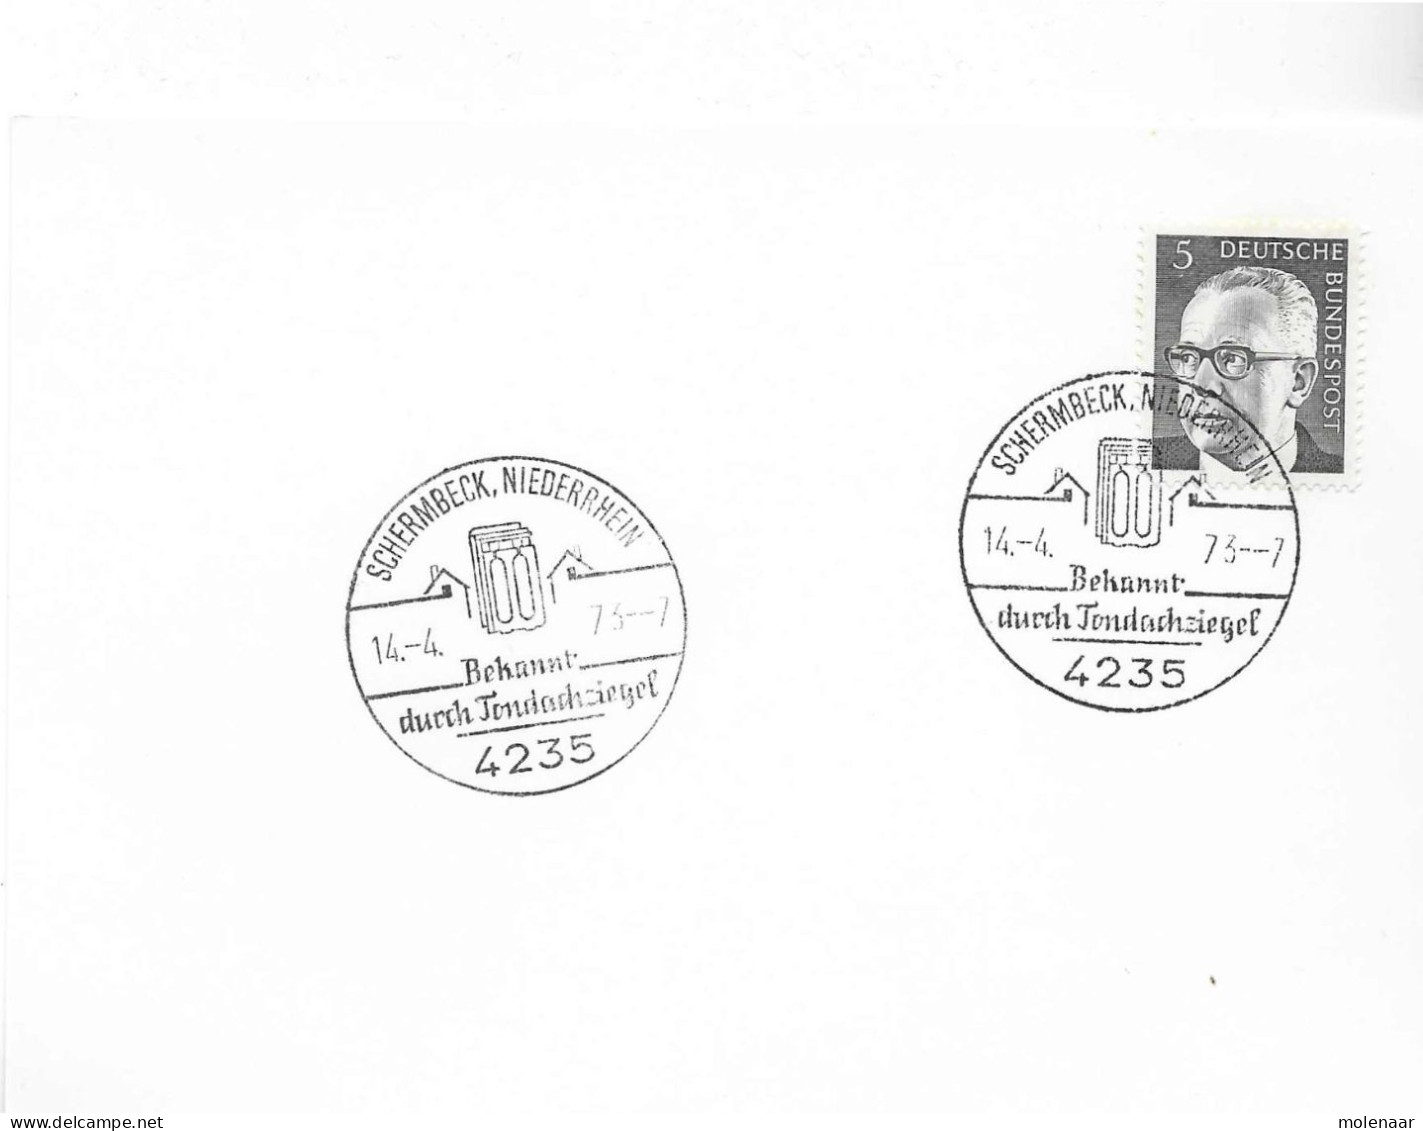 Postzegels > Europa > Duitsland > West-Duitsland > 1970-1979 >kaart Met No. 635 (17399) - Briefe U. Dokumente